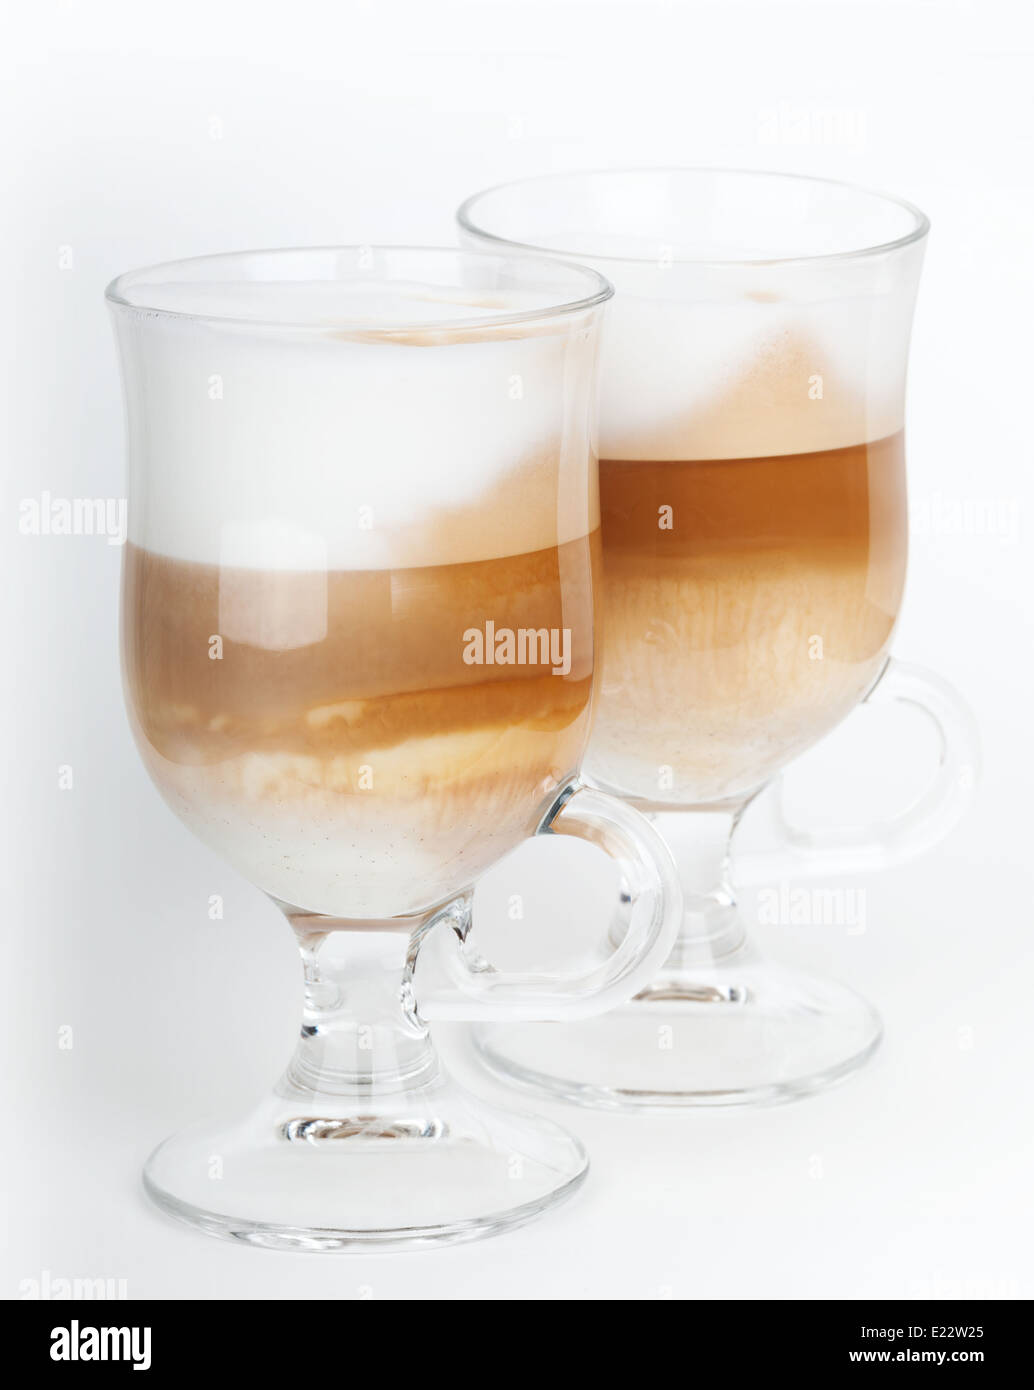 https://c8.alamy.com/comp/E22W25/two-glass-mugs-with-handles-of-latte-coffee-macro-photo-E22W25.jpg